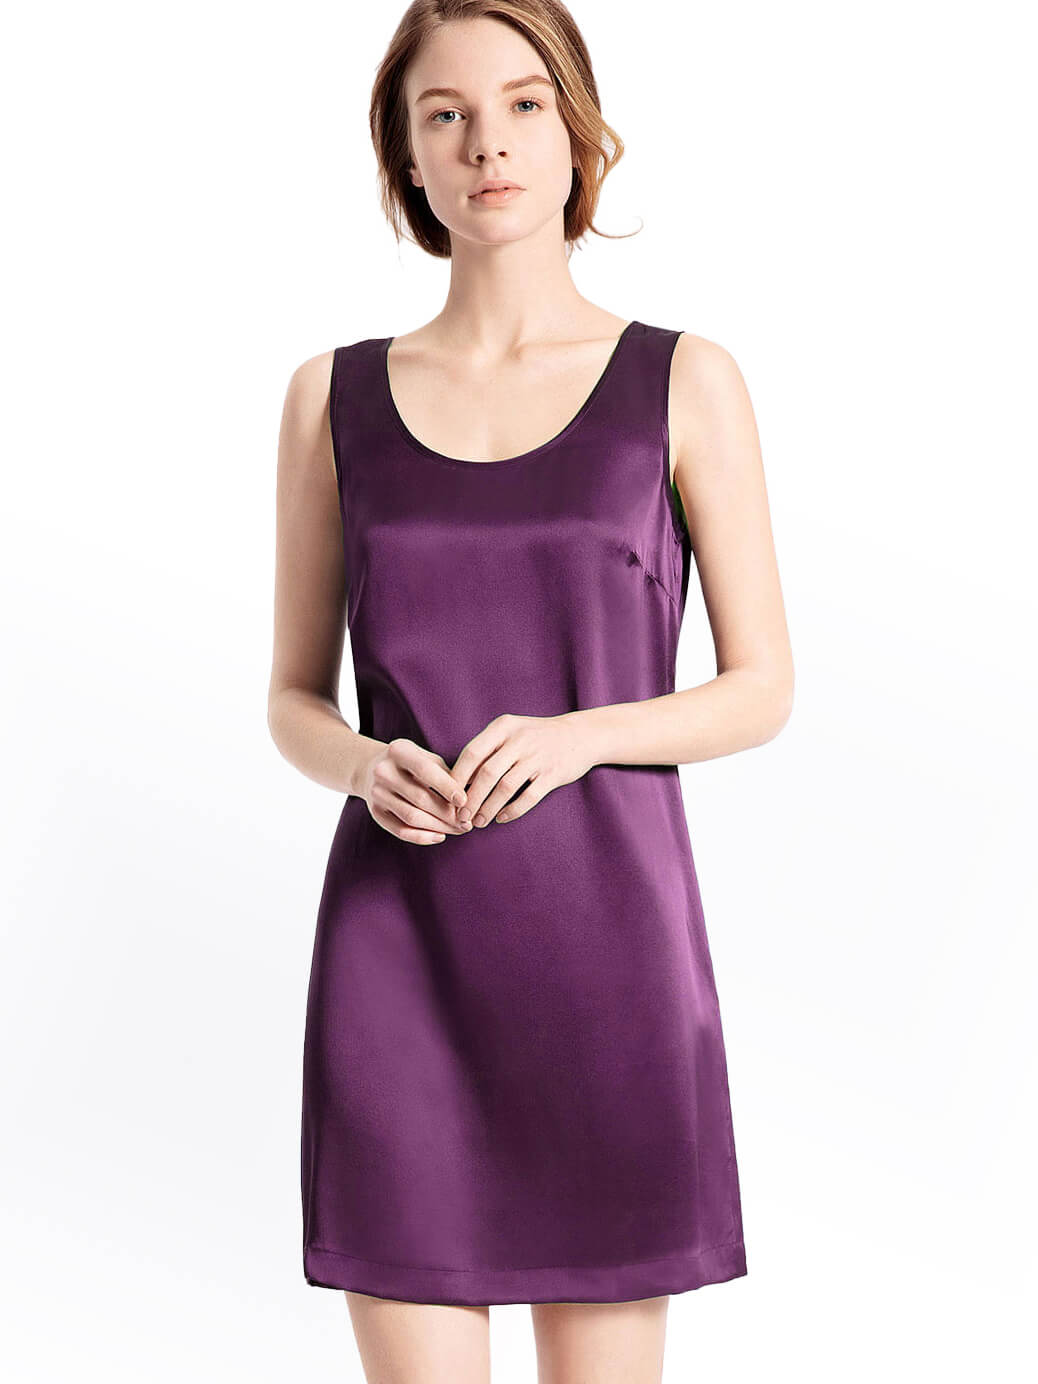 TFGO Purple & White Cotton Full Long Camisole Slip for Women, Pack